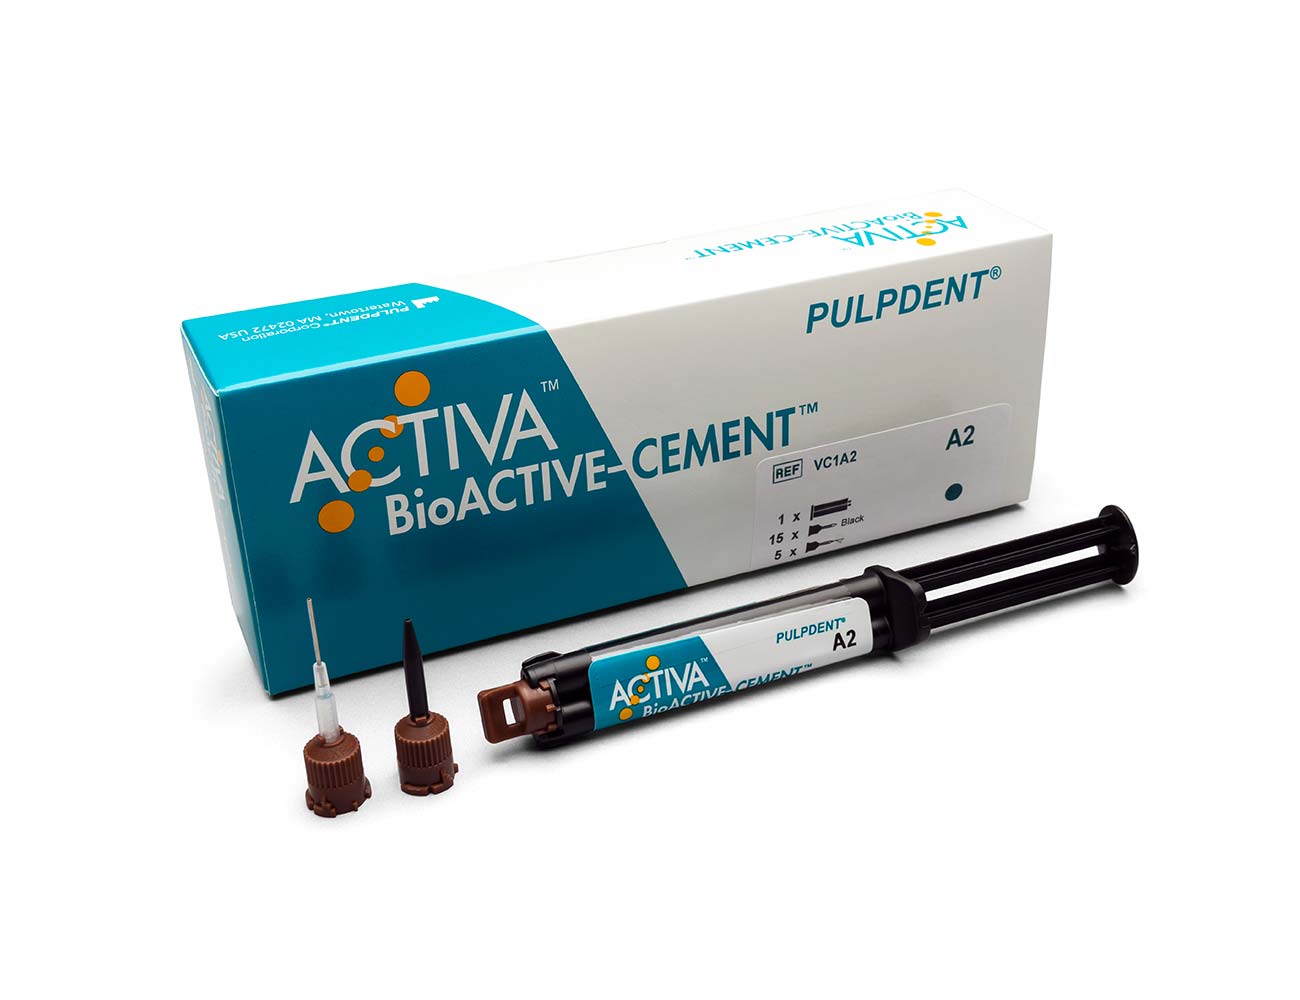 ACTIVA BioACTIV Cement A2 5ml+20Tips